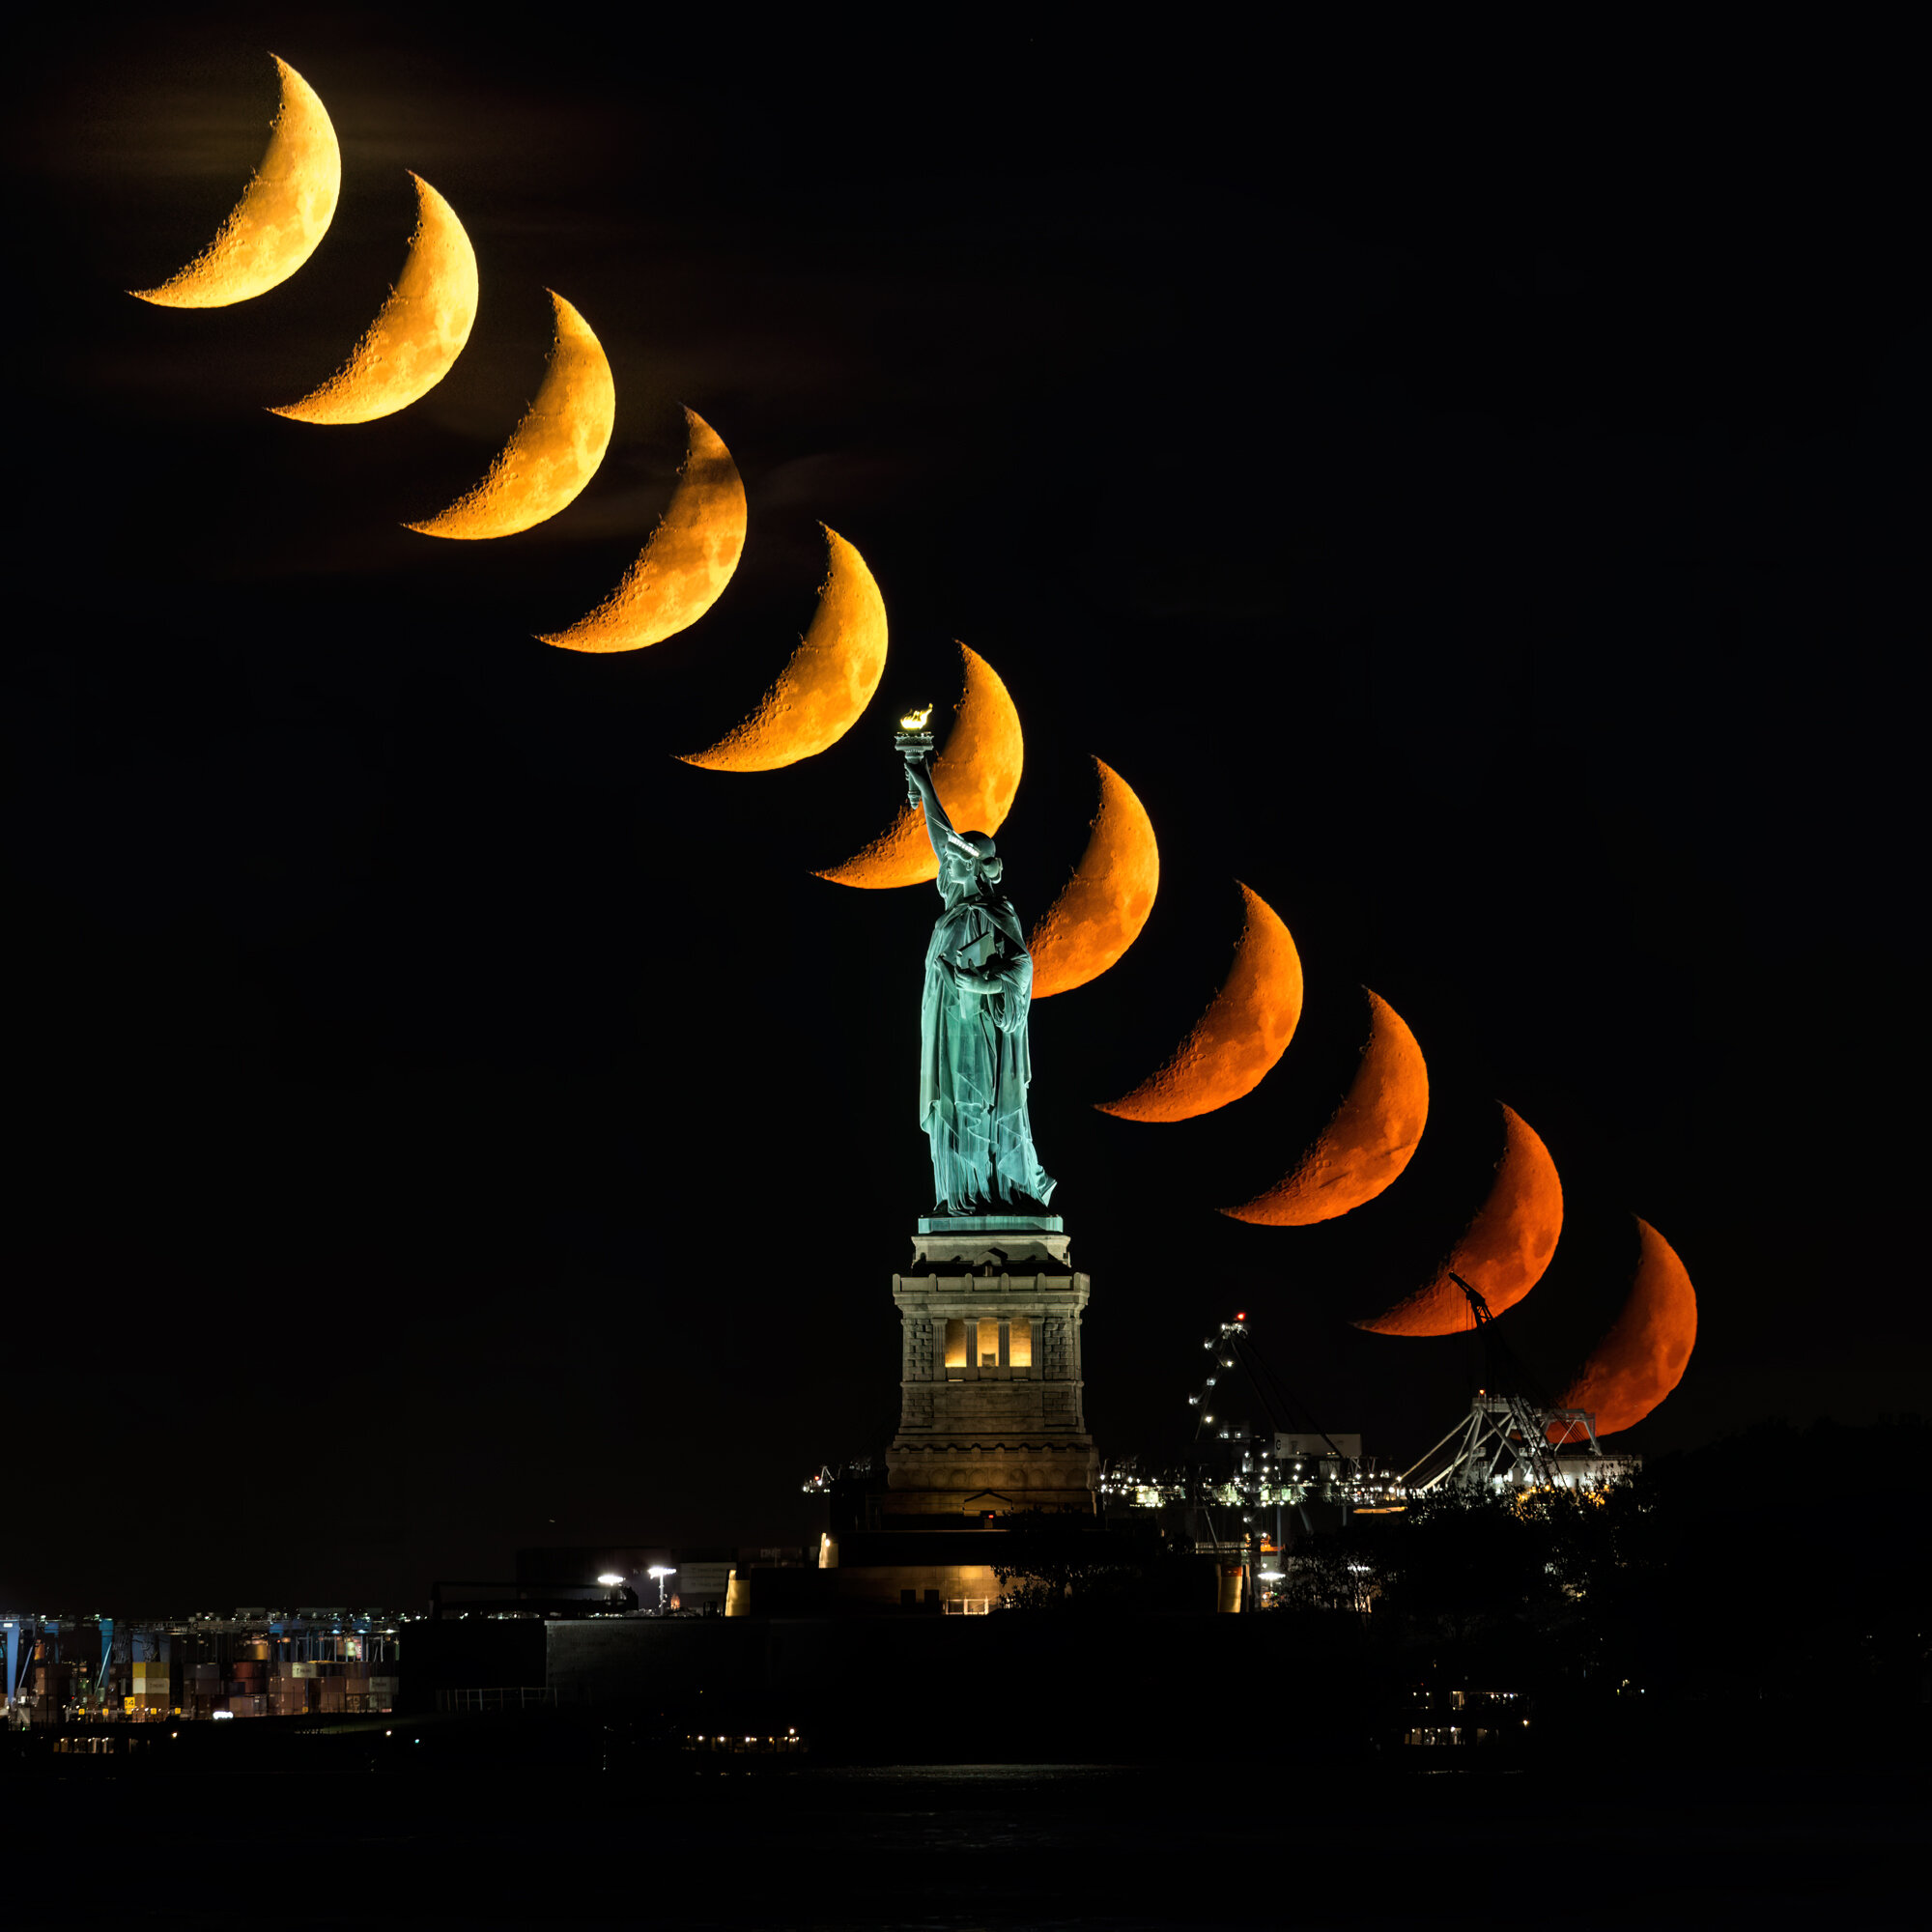 Moonset behind Statue of Liberty
#NewYorkCity #WhatsGoodNYC #VisitNYC #NYCTourism #NYCorNowhere⁠ #ILoveNY #NikonNoFilter #NikonCreators #NikonZCreators #NIKKORZ 
#YourShotPhotographer #TLPicks #NikonZ7